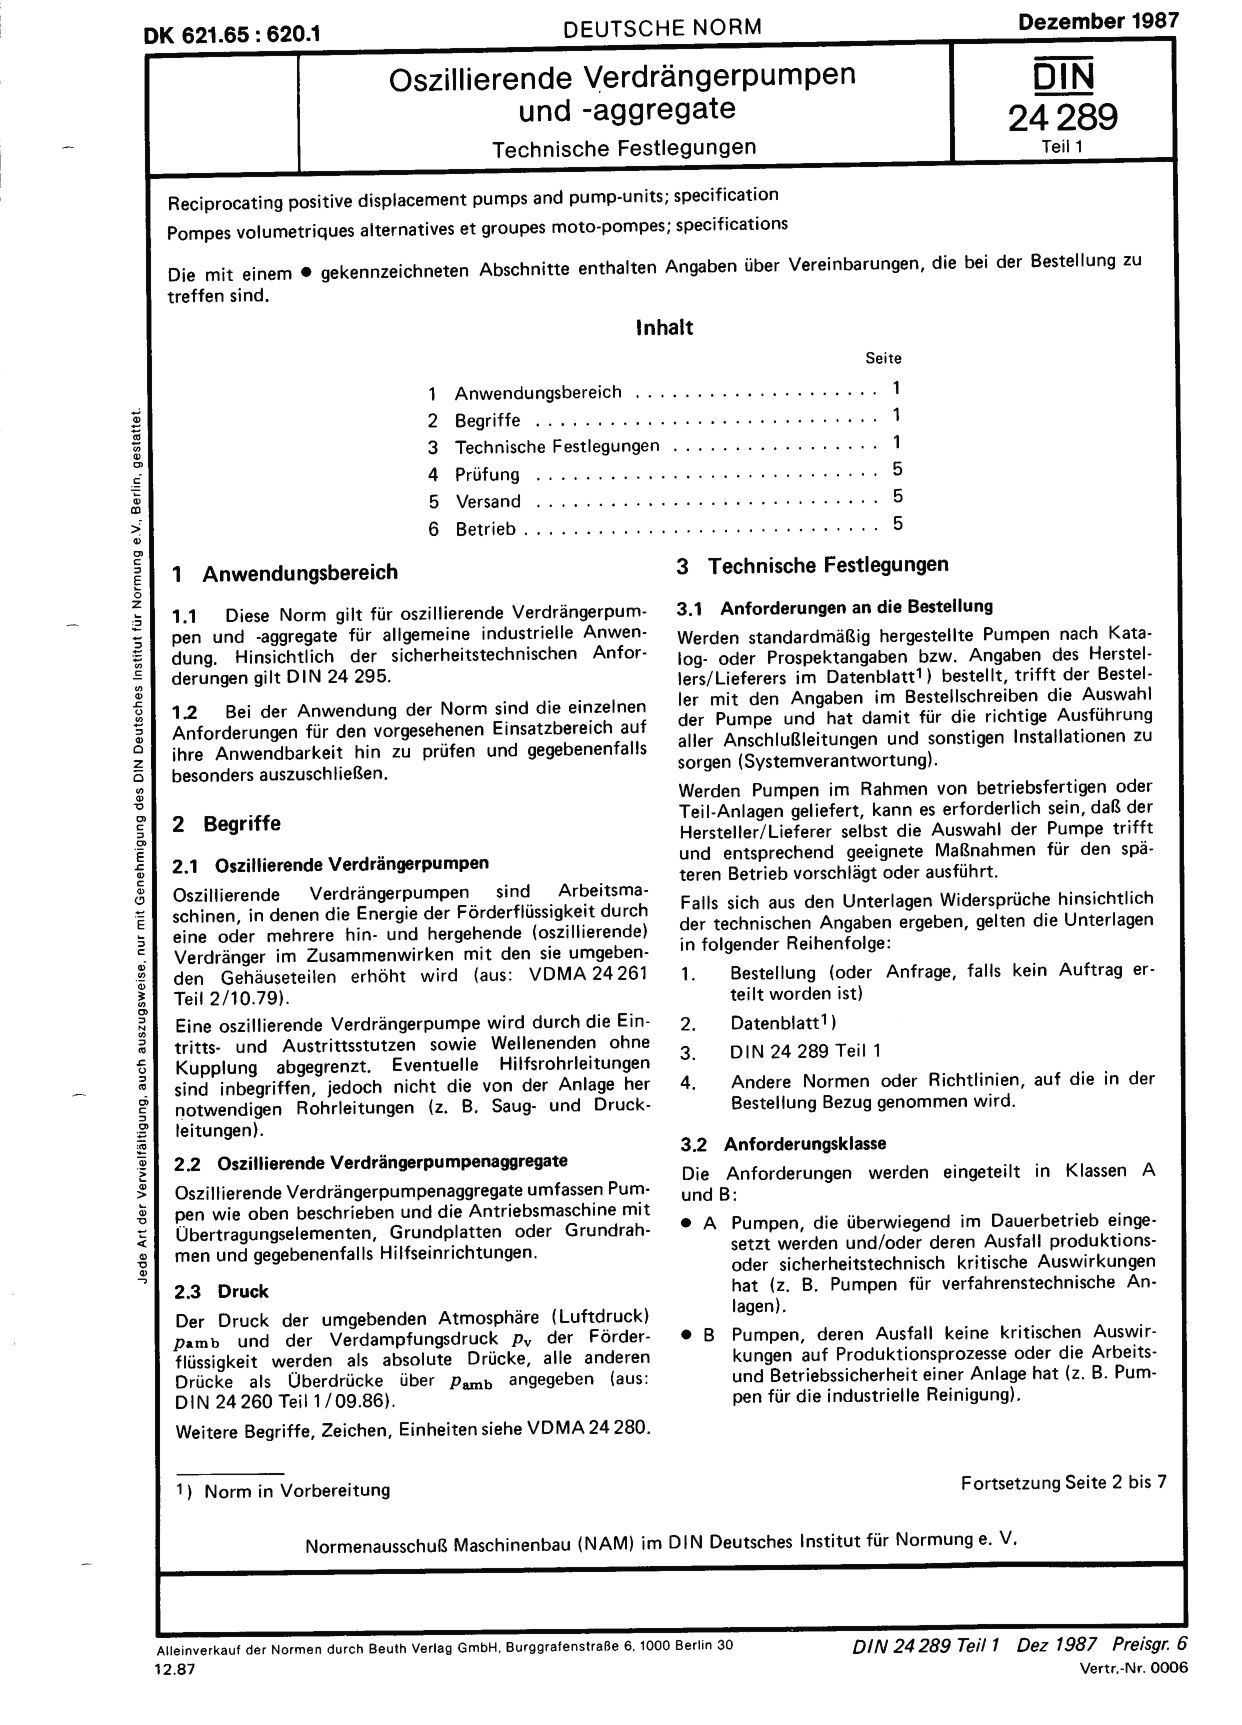 DIN 24289-1:1987封面图